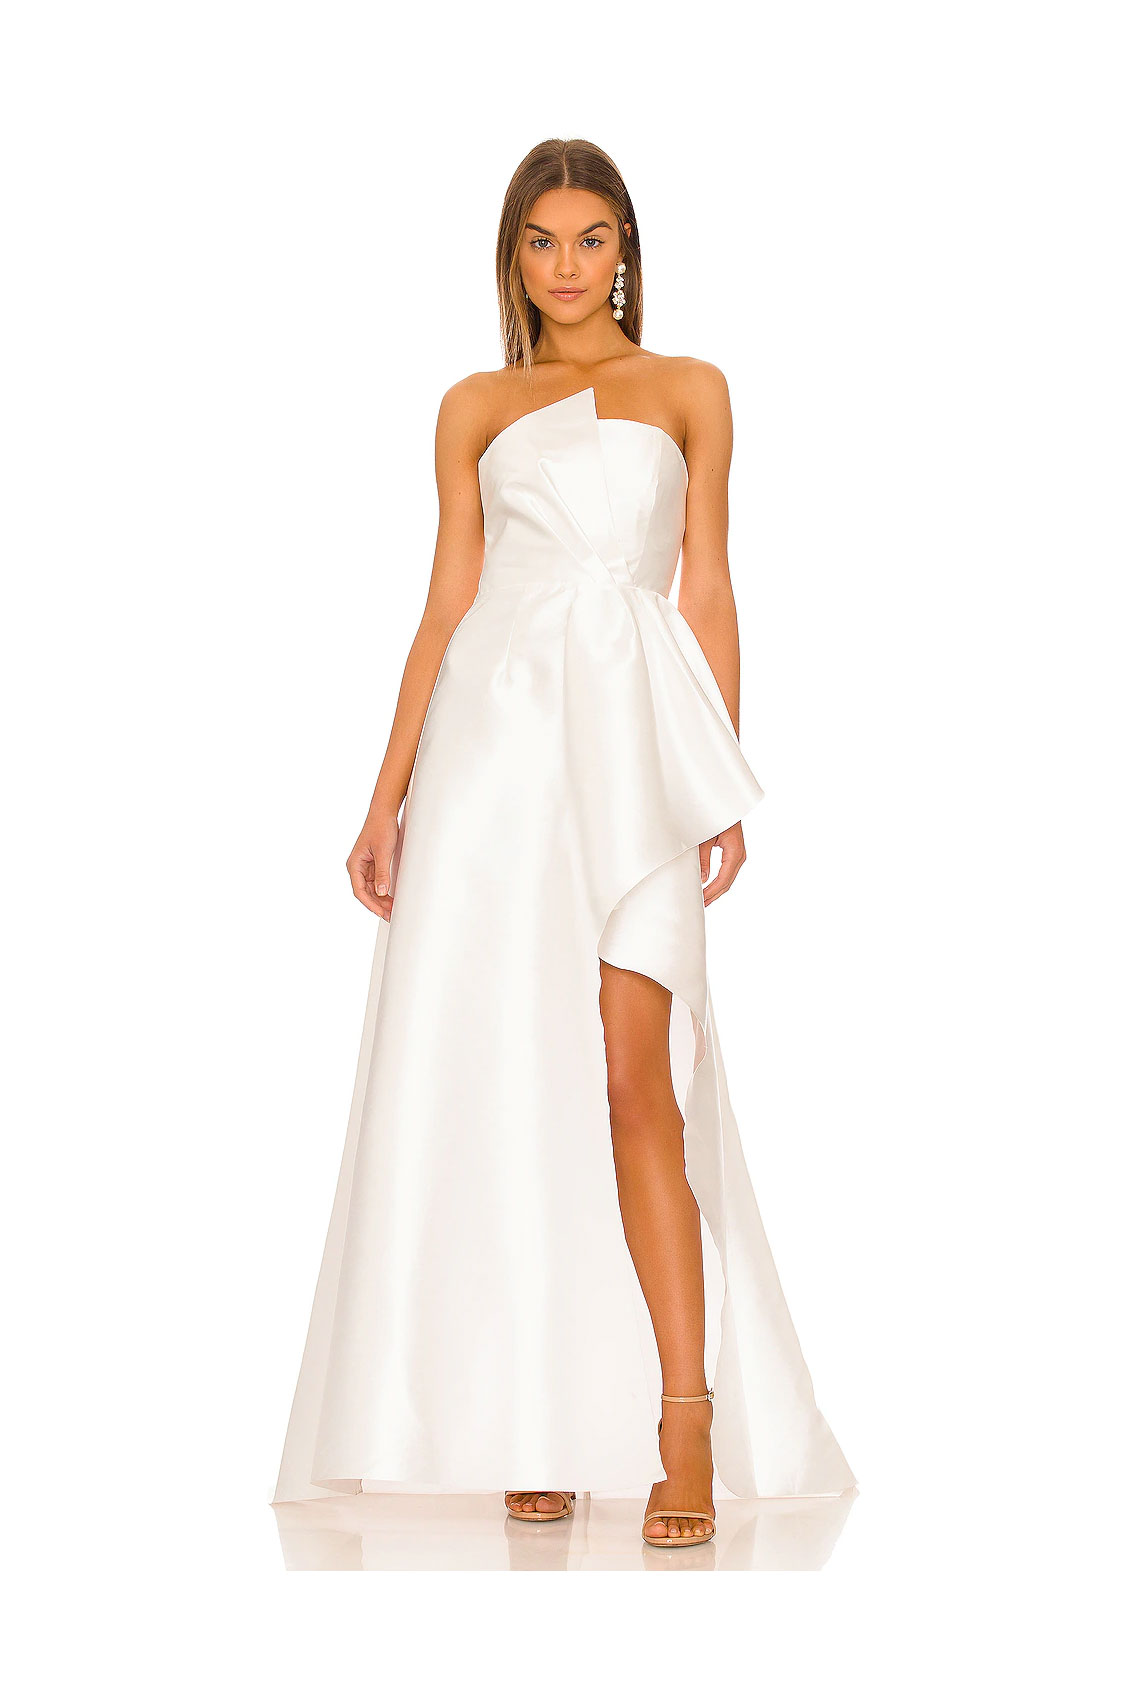 $260 wedding dress